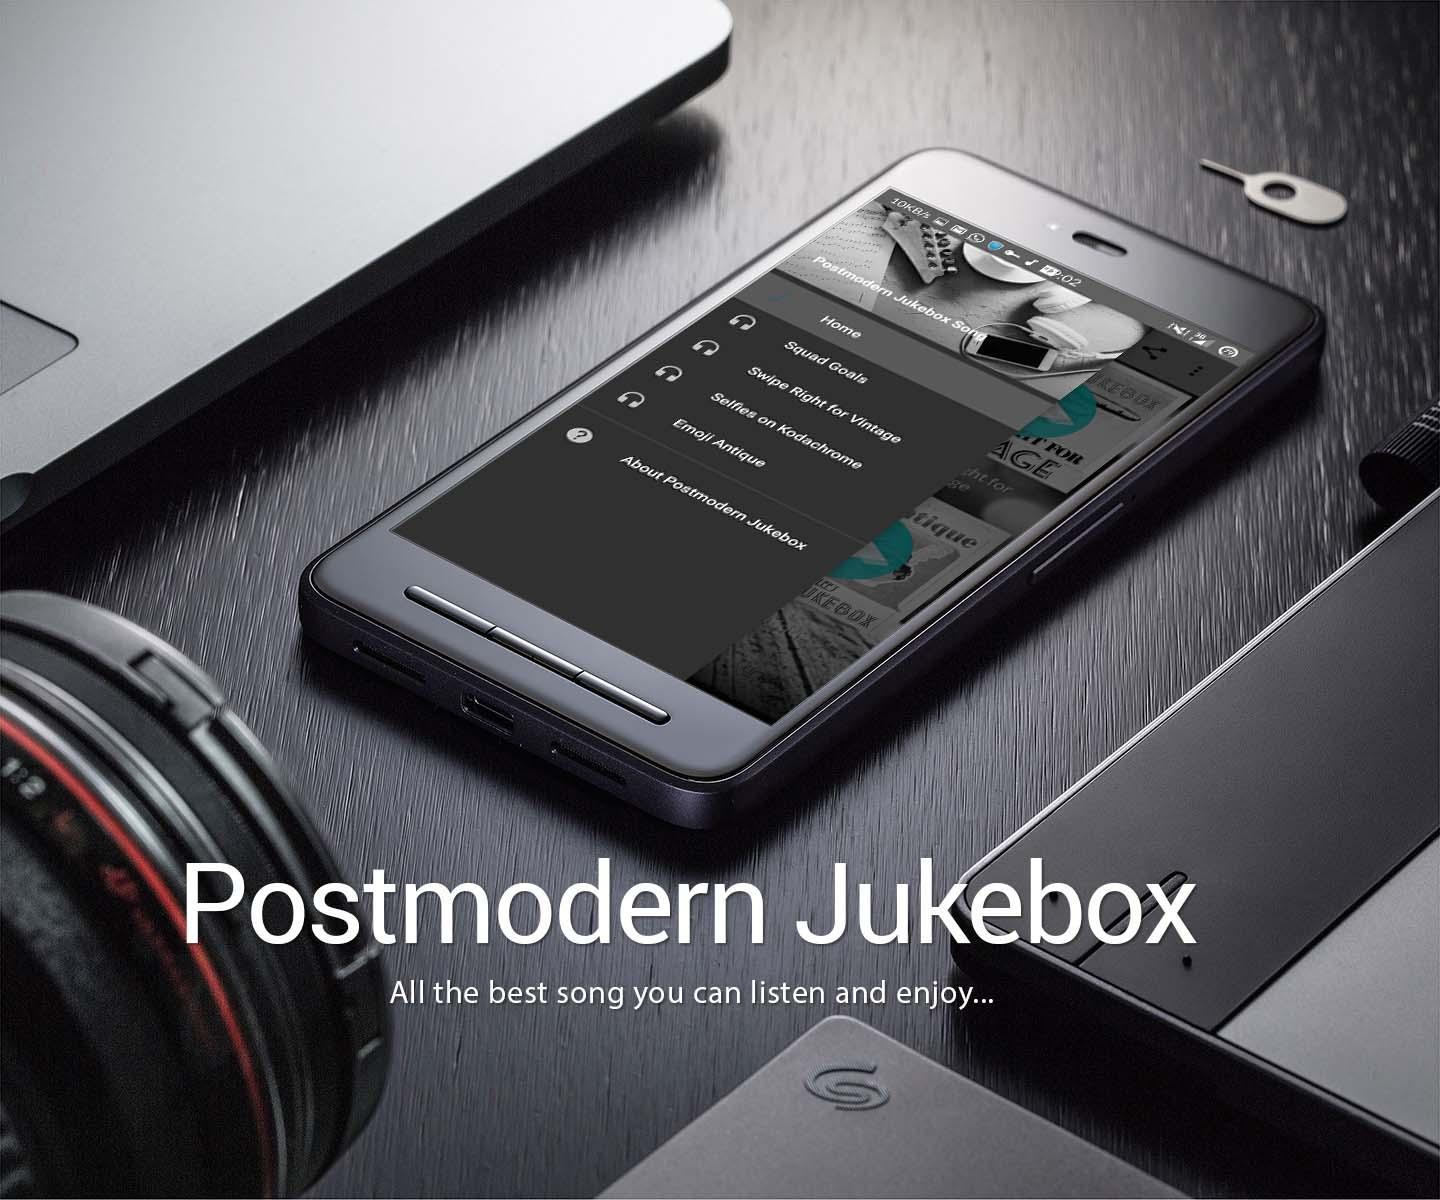 Scott Bradlee S Postmodern Jukebox Song For Android Apk Download